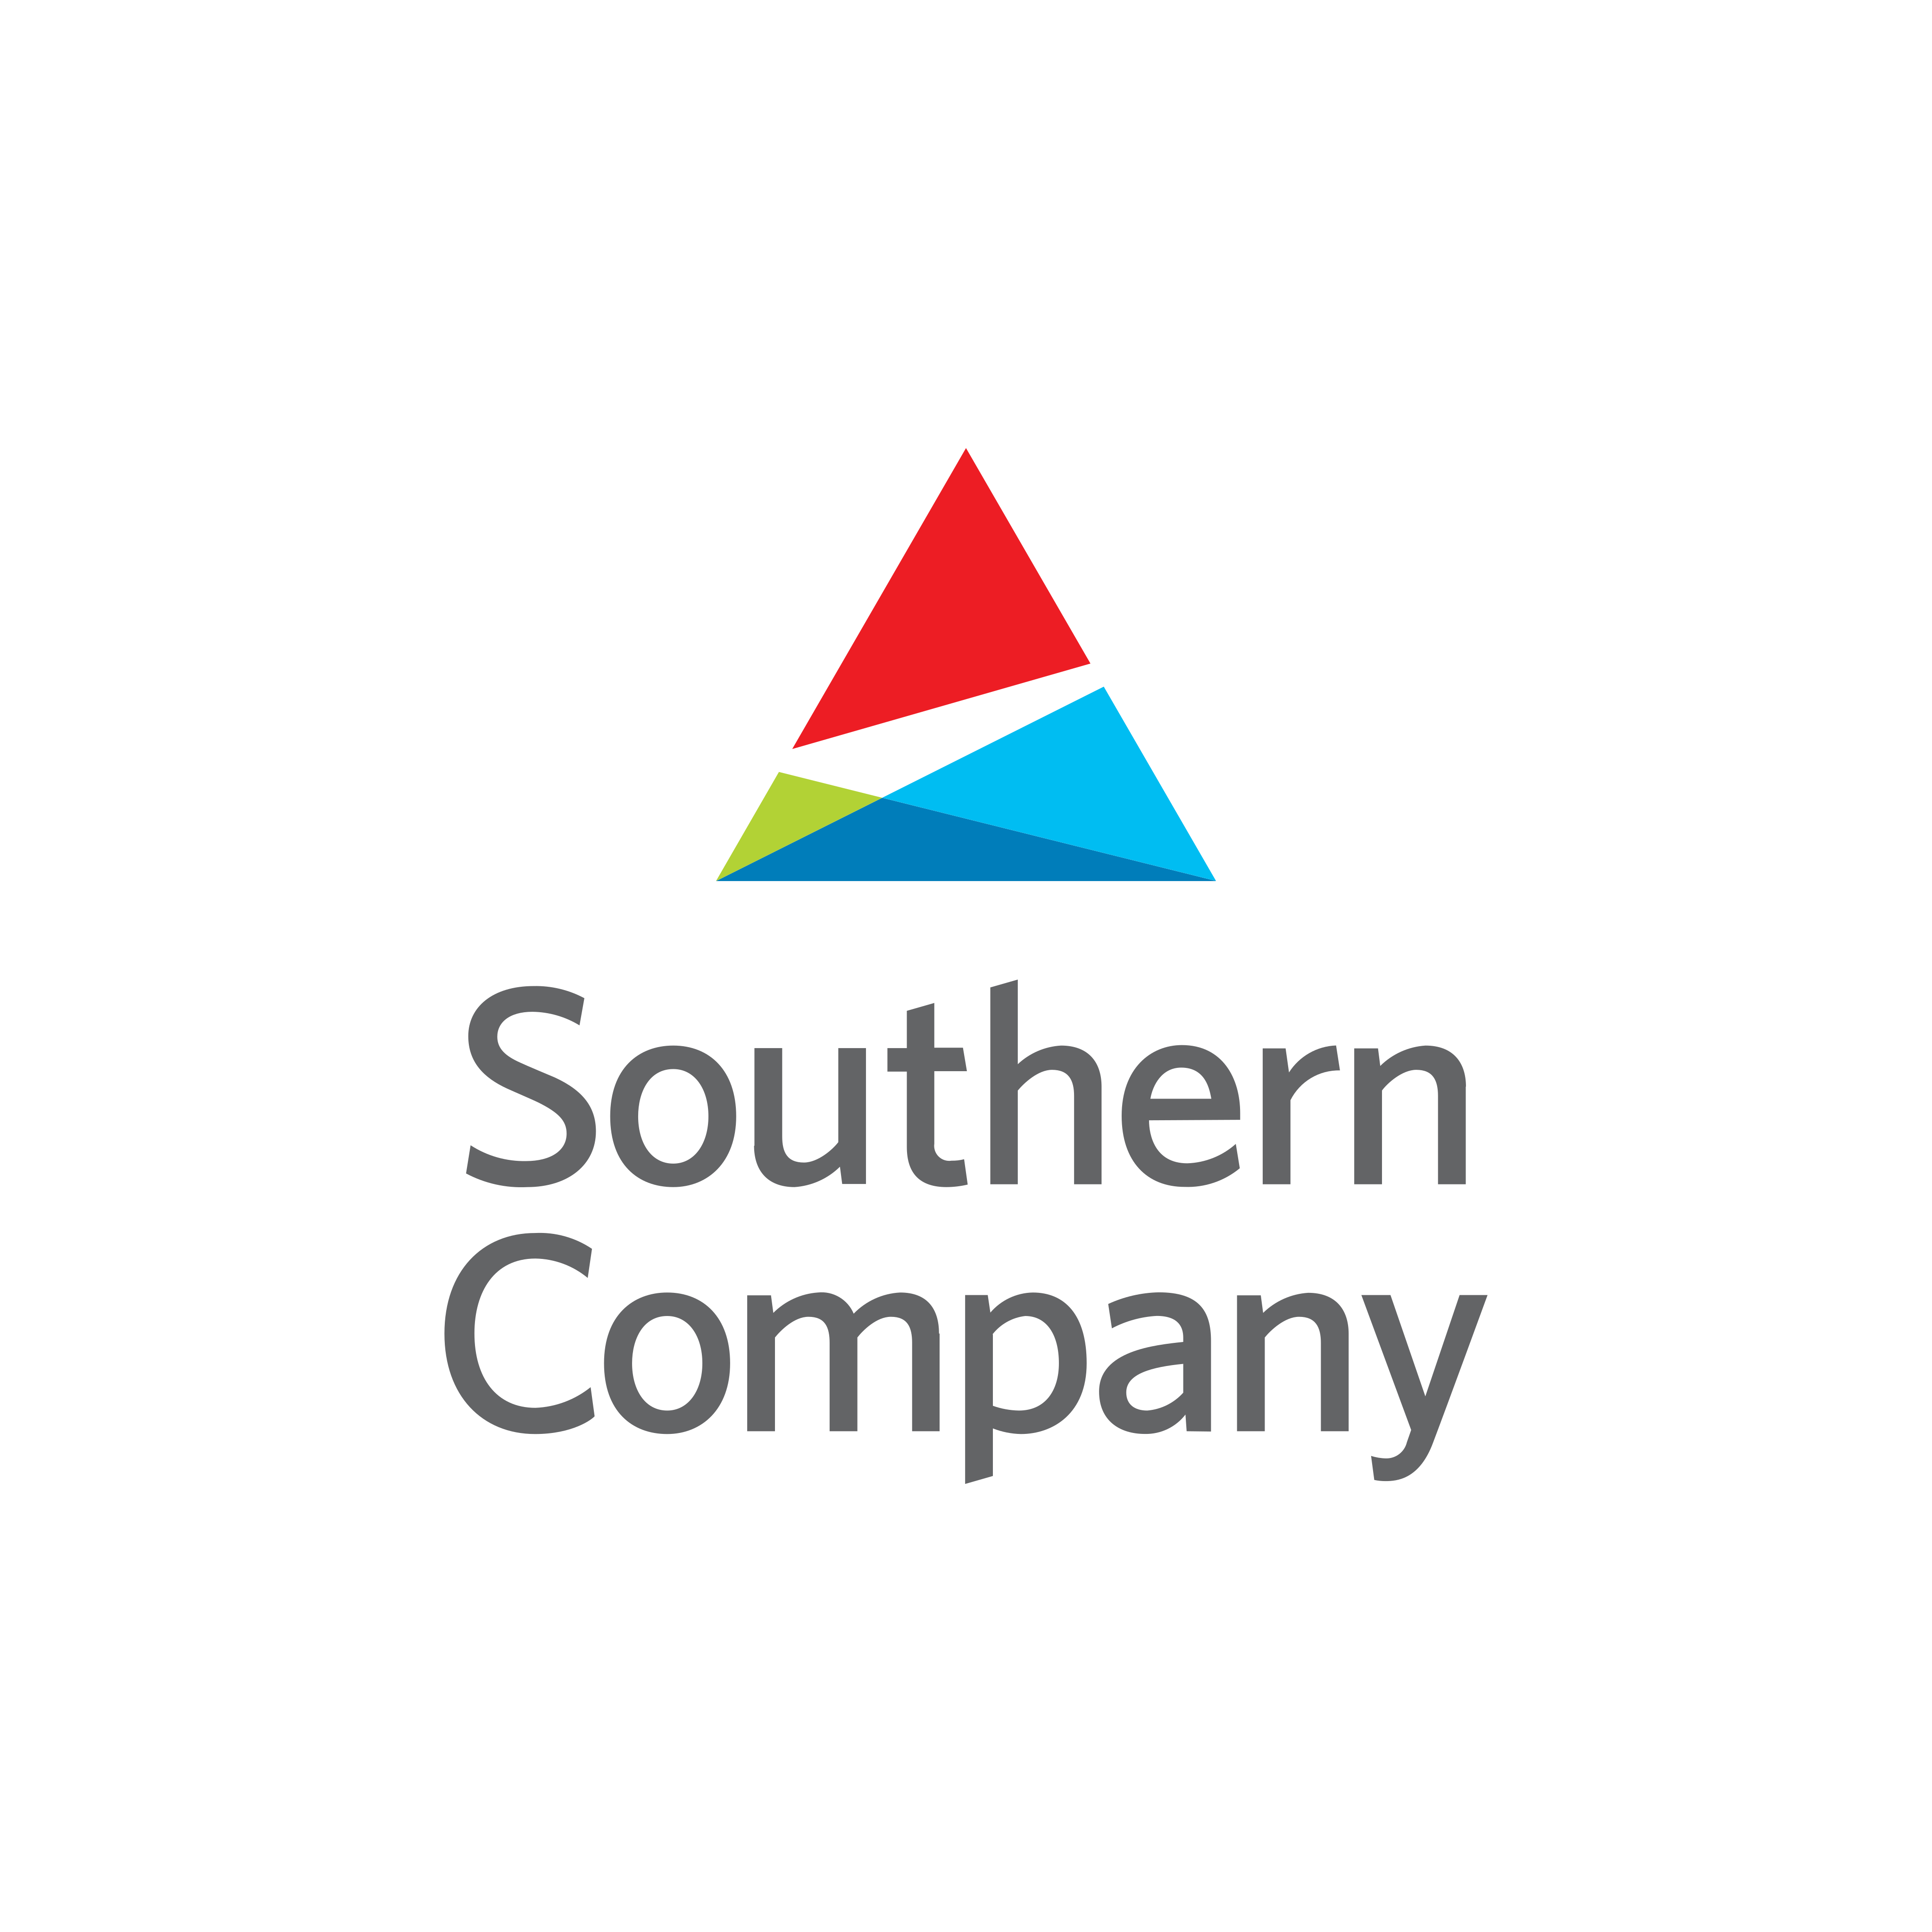 Southern Company Logo PNG.